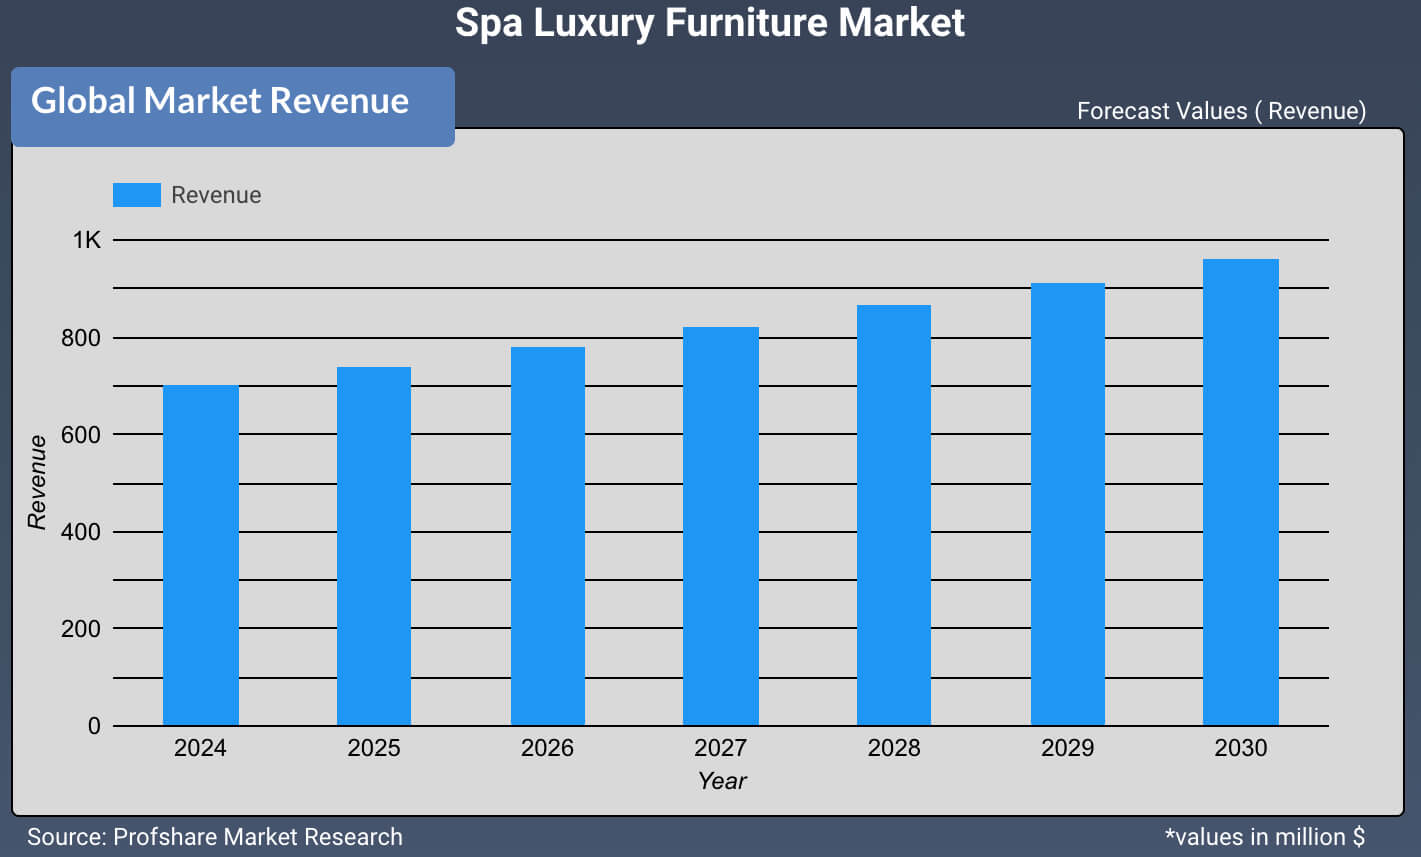 Spa Luxury Furniture Market